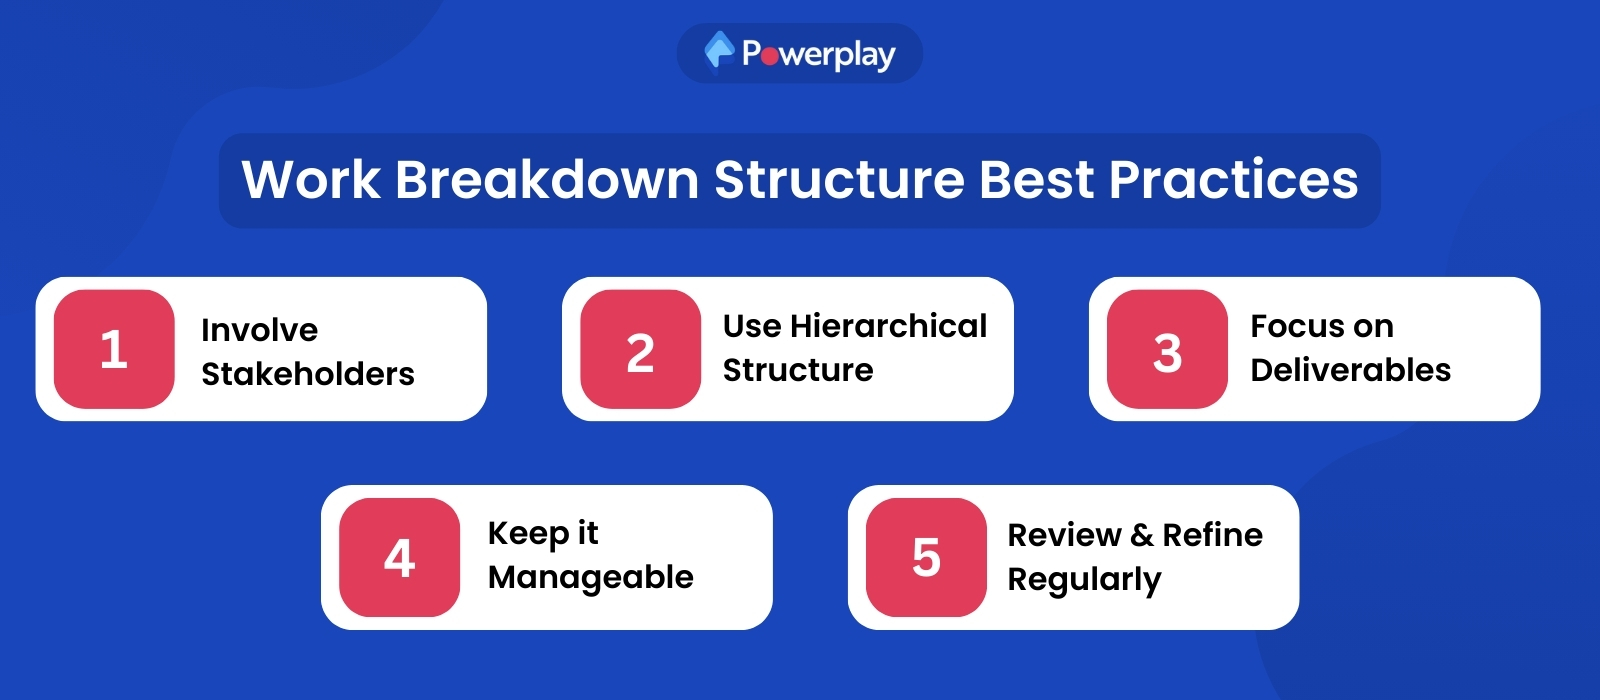 Work Breakdown Structure Best Practices 